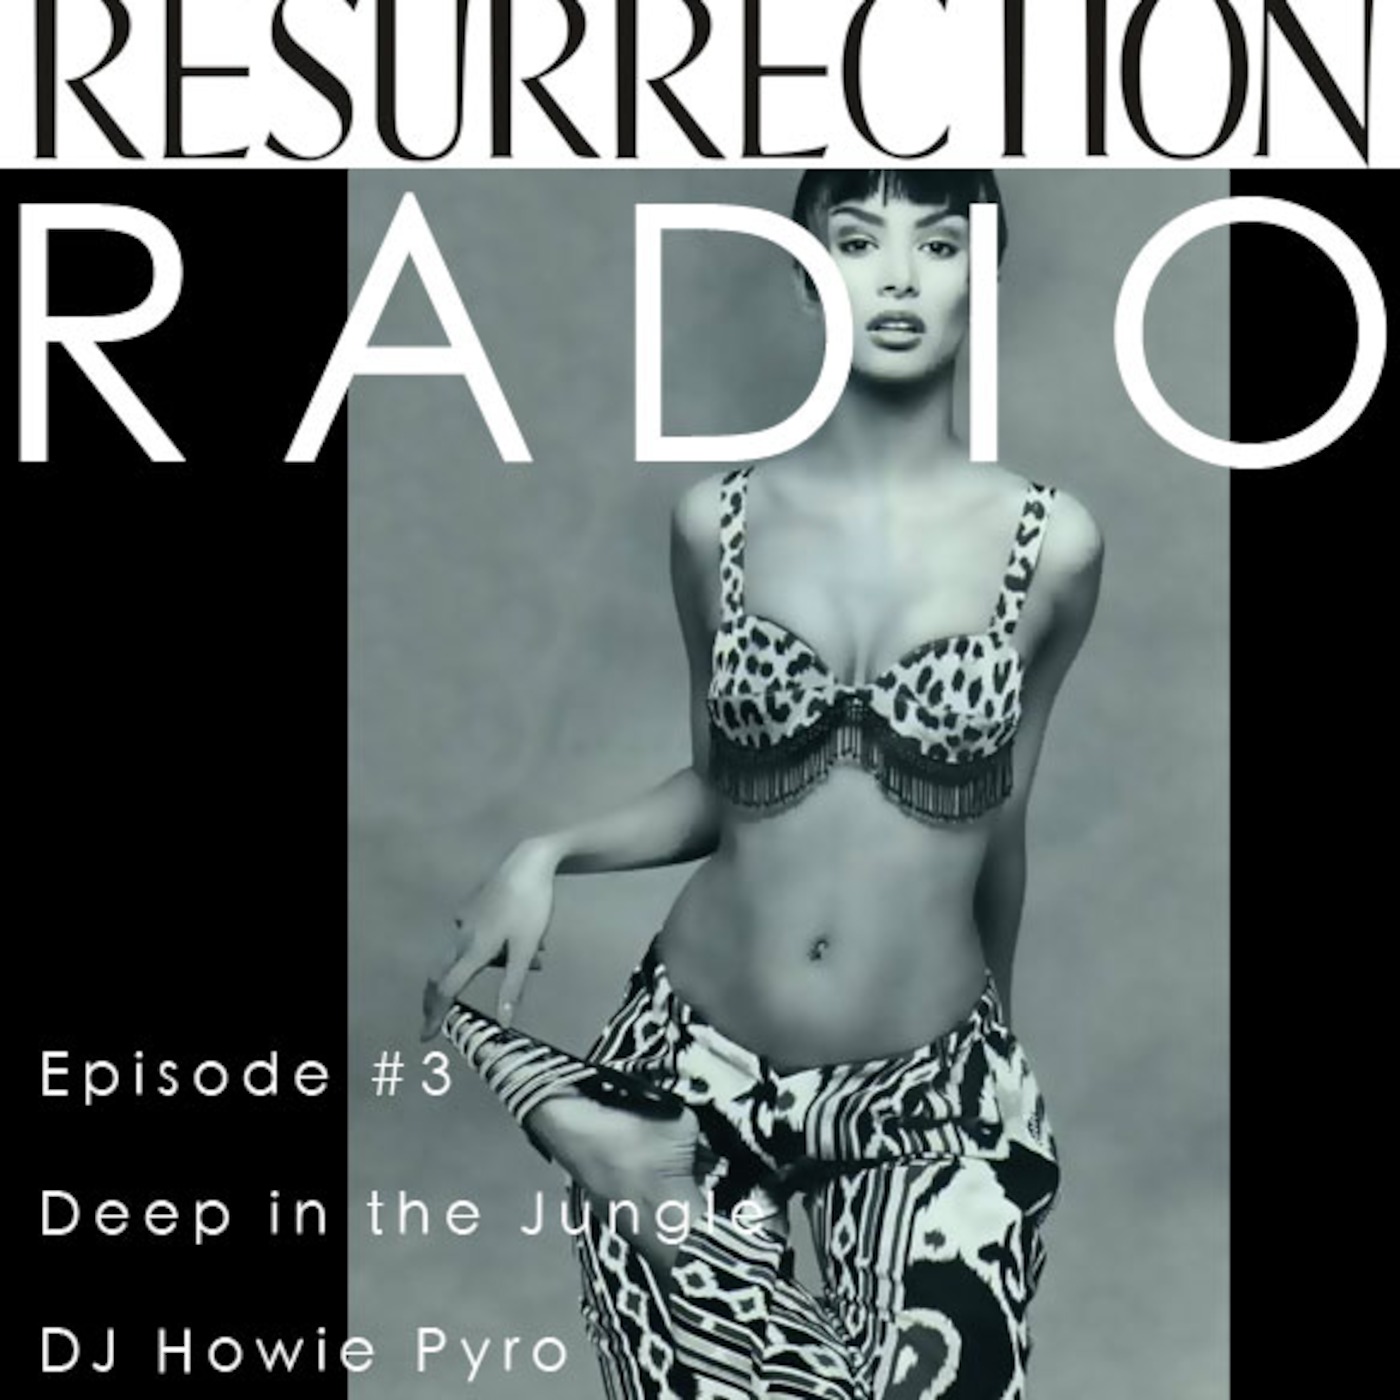 Resurrection Radio Episode 3 - Deep in the Jungle